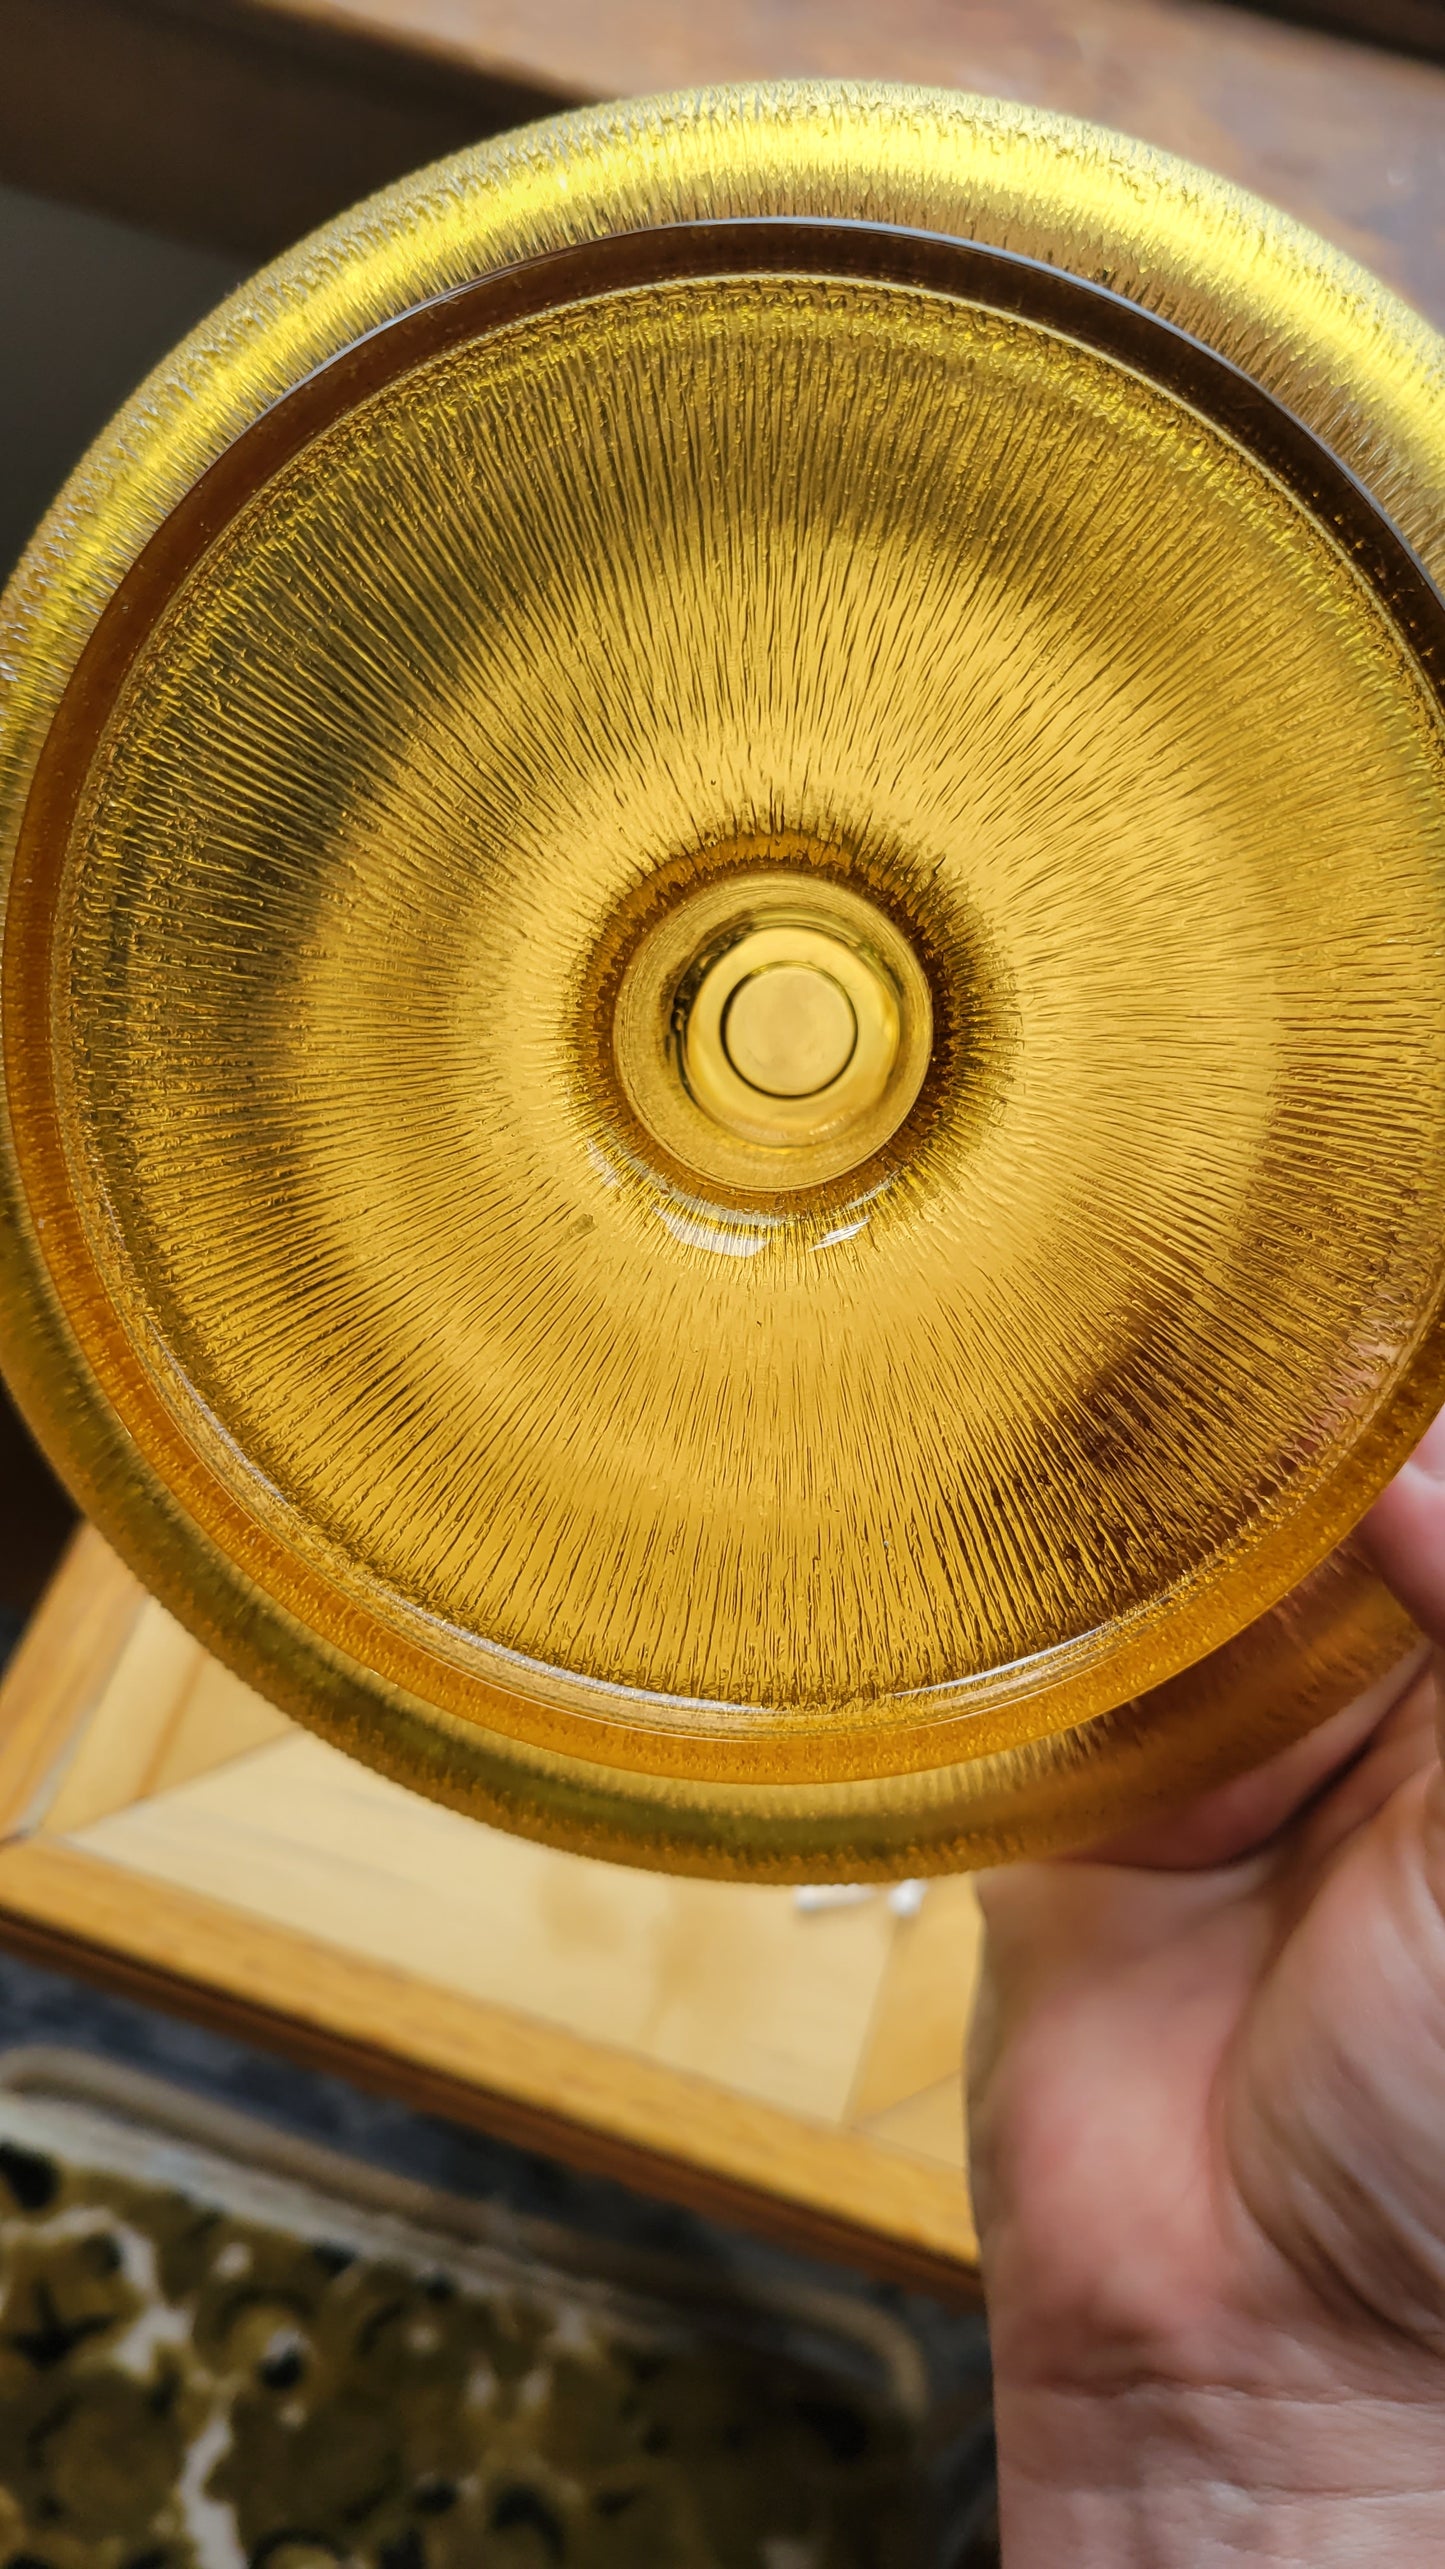 Amber Glass Pedestal Dish